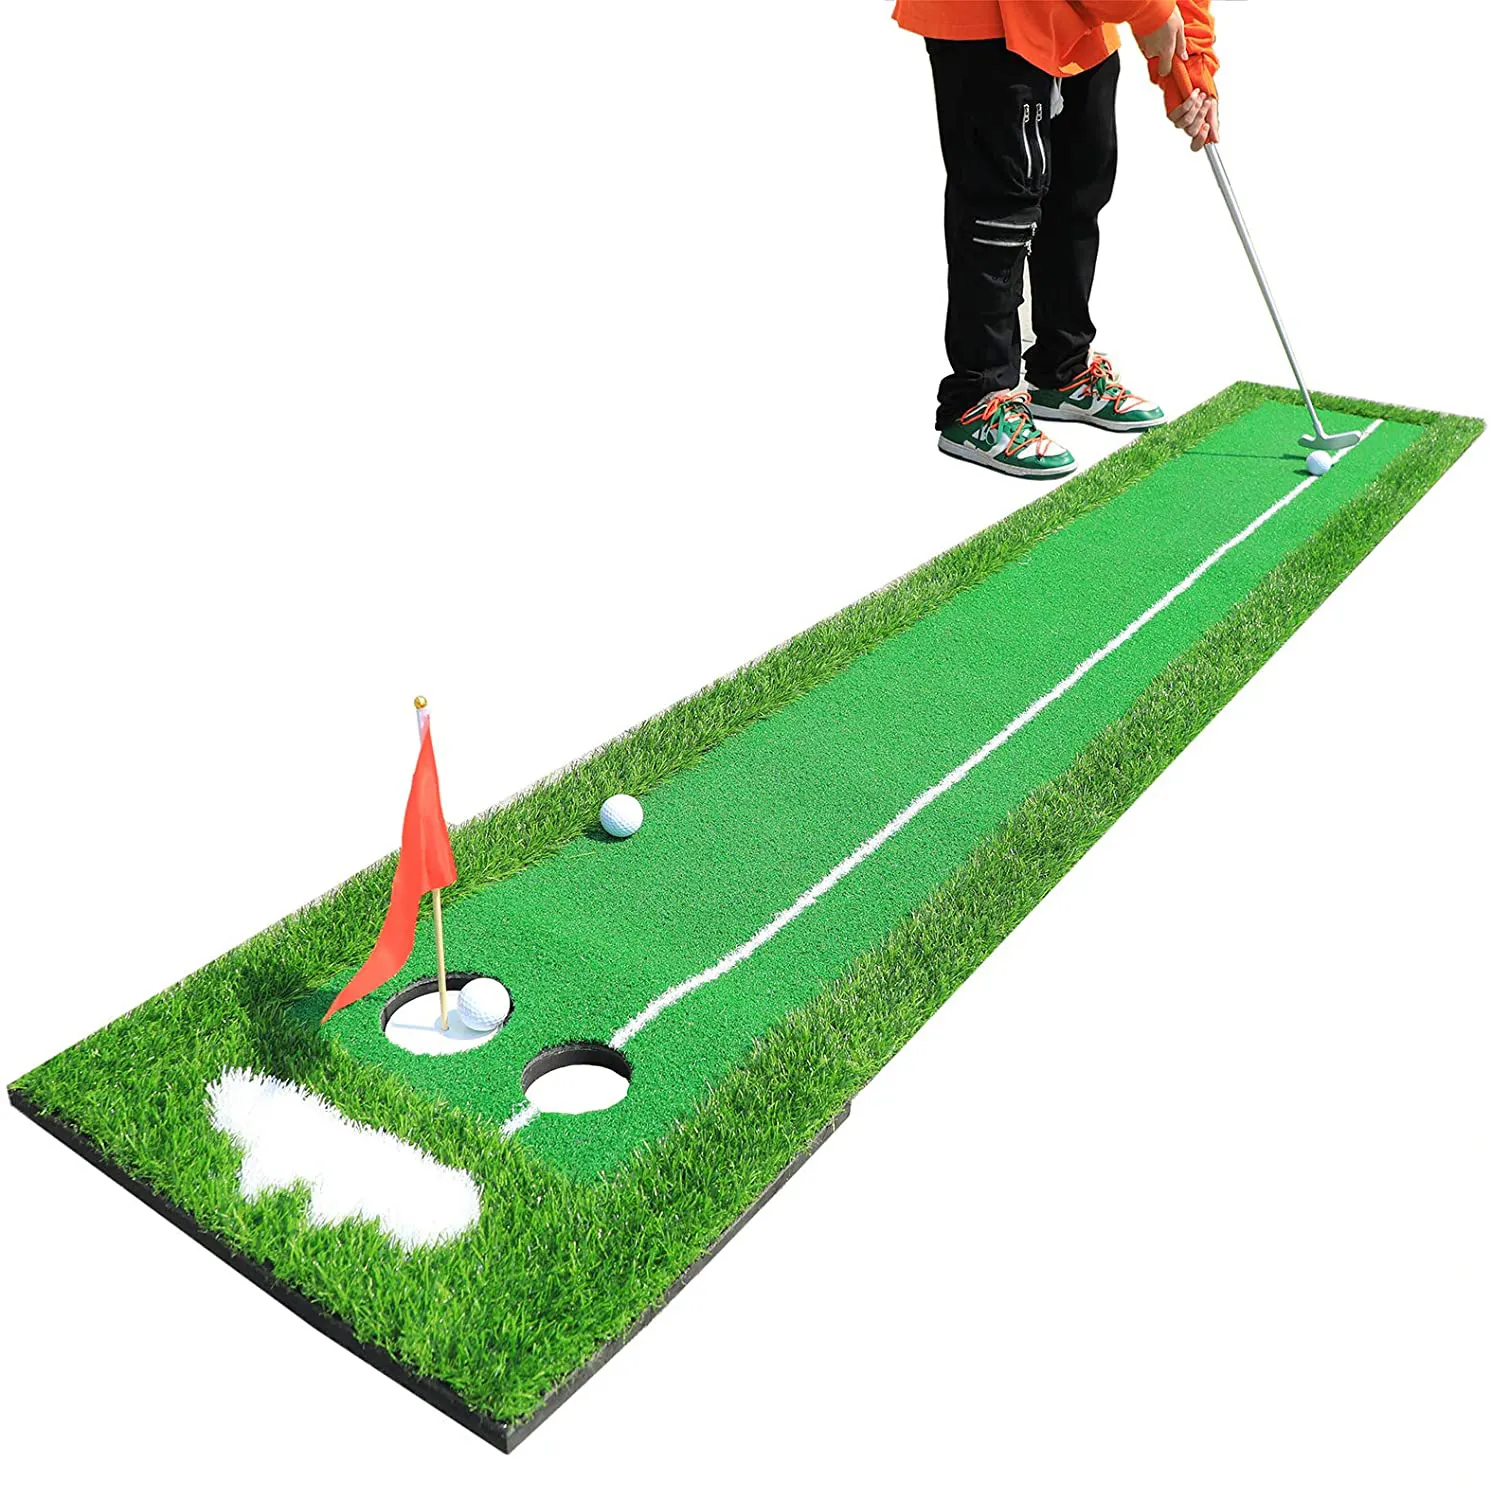 Golf Putting Green para interiores y exteriores Golf Putting Mat Portable Golf Practice Mat Training Aid Gift para todos los niveles de habilidad Golfista